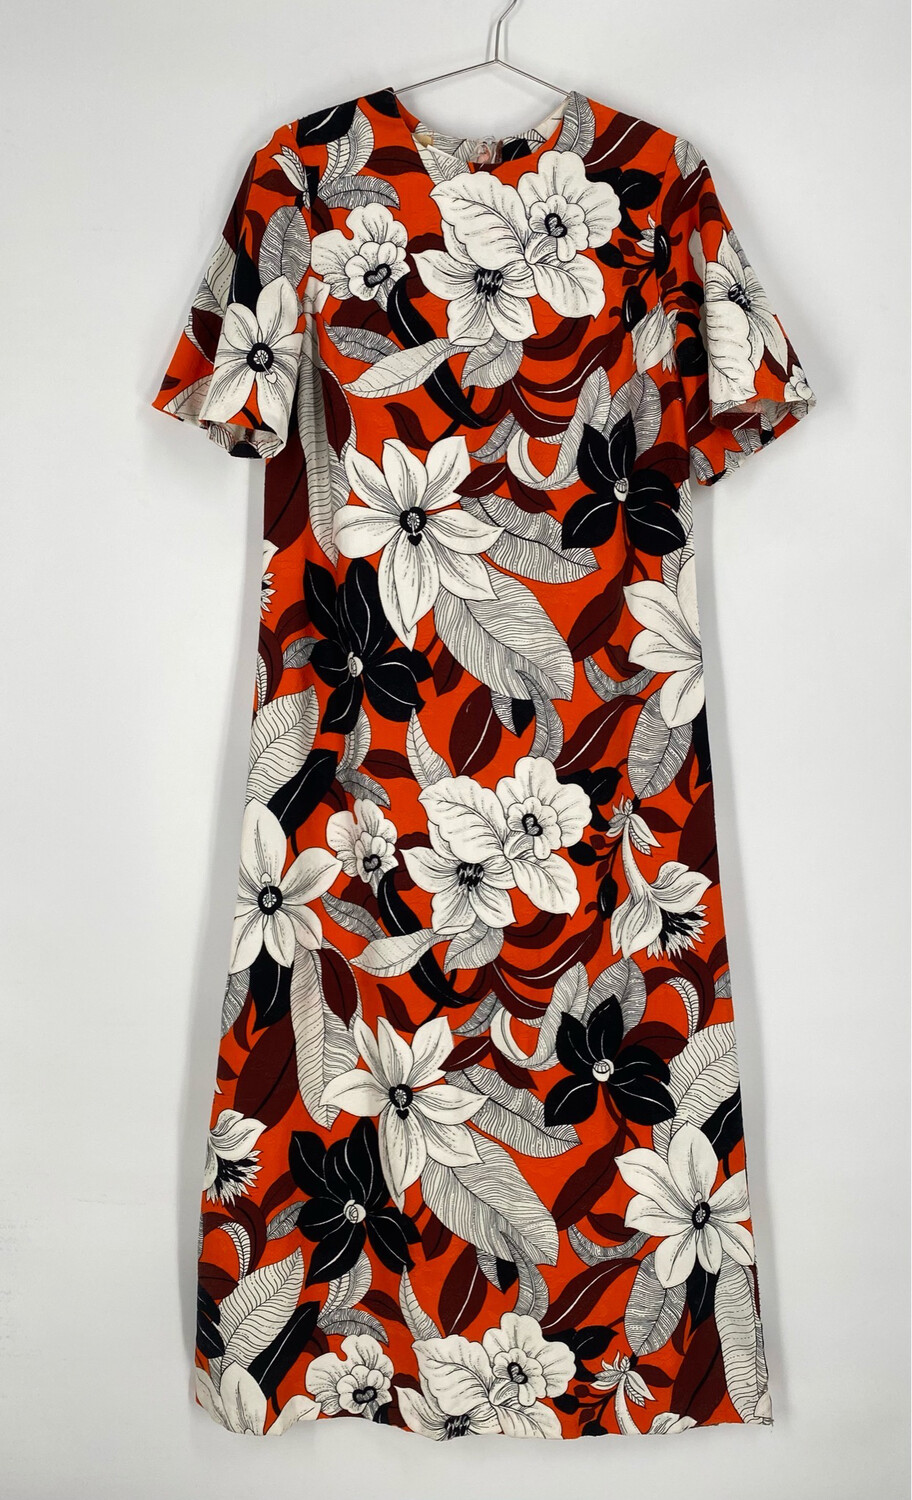 Royal Hawaiian Floral Maxi Dress Size 2X